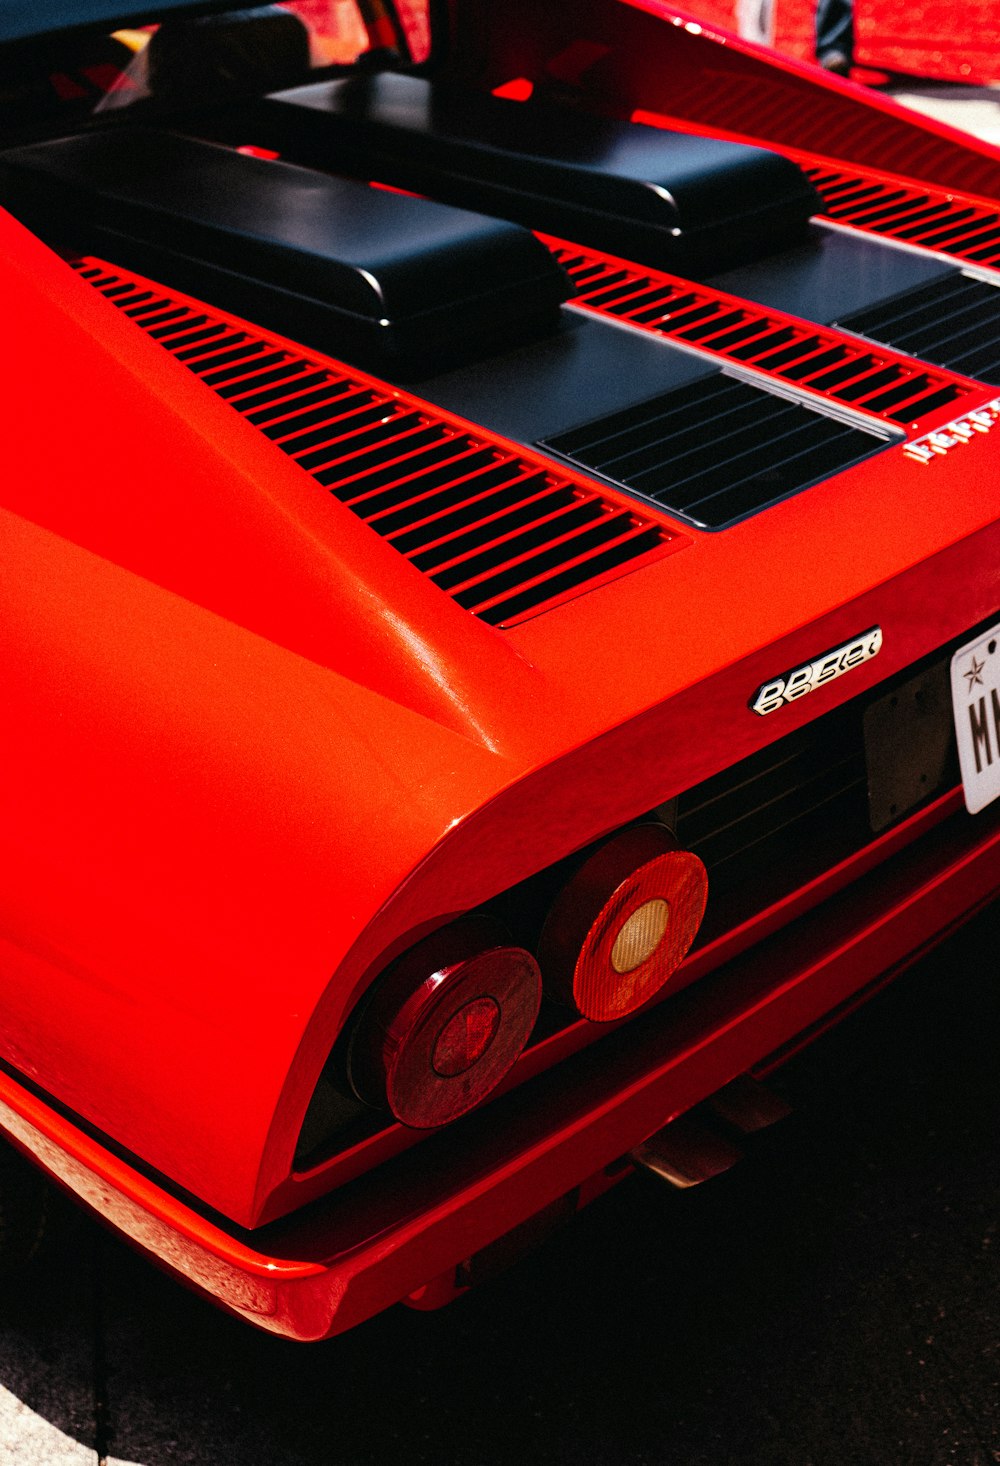 Classic Ferrari Pictures | Download Free Images on Unsplash